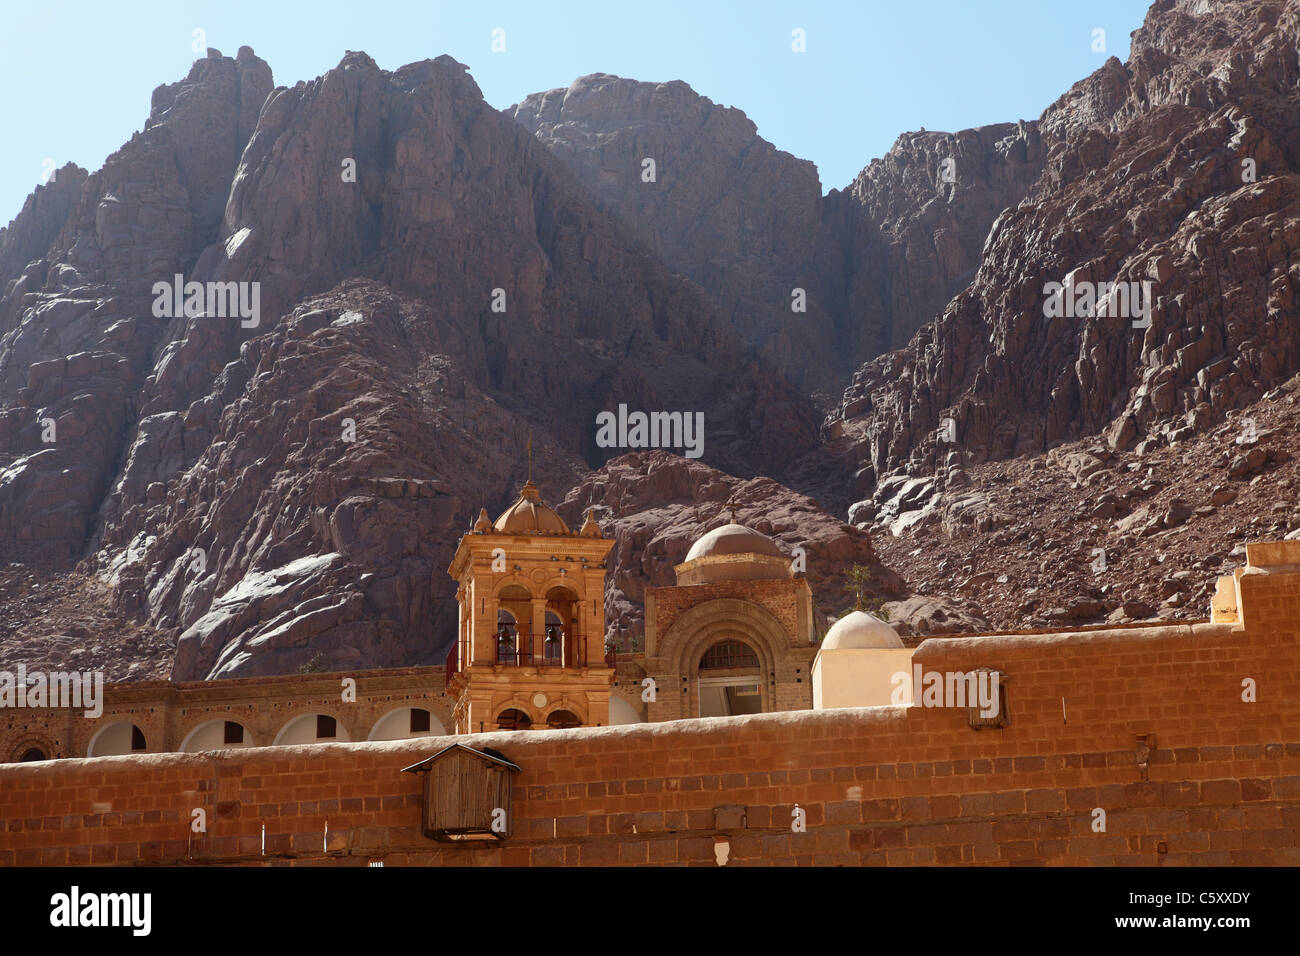 St Catherine's Monastery, under Mount Sinai, on the Sinai Peninsula in Egypt. Stock Photo